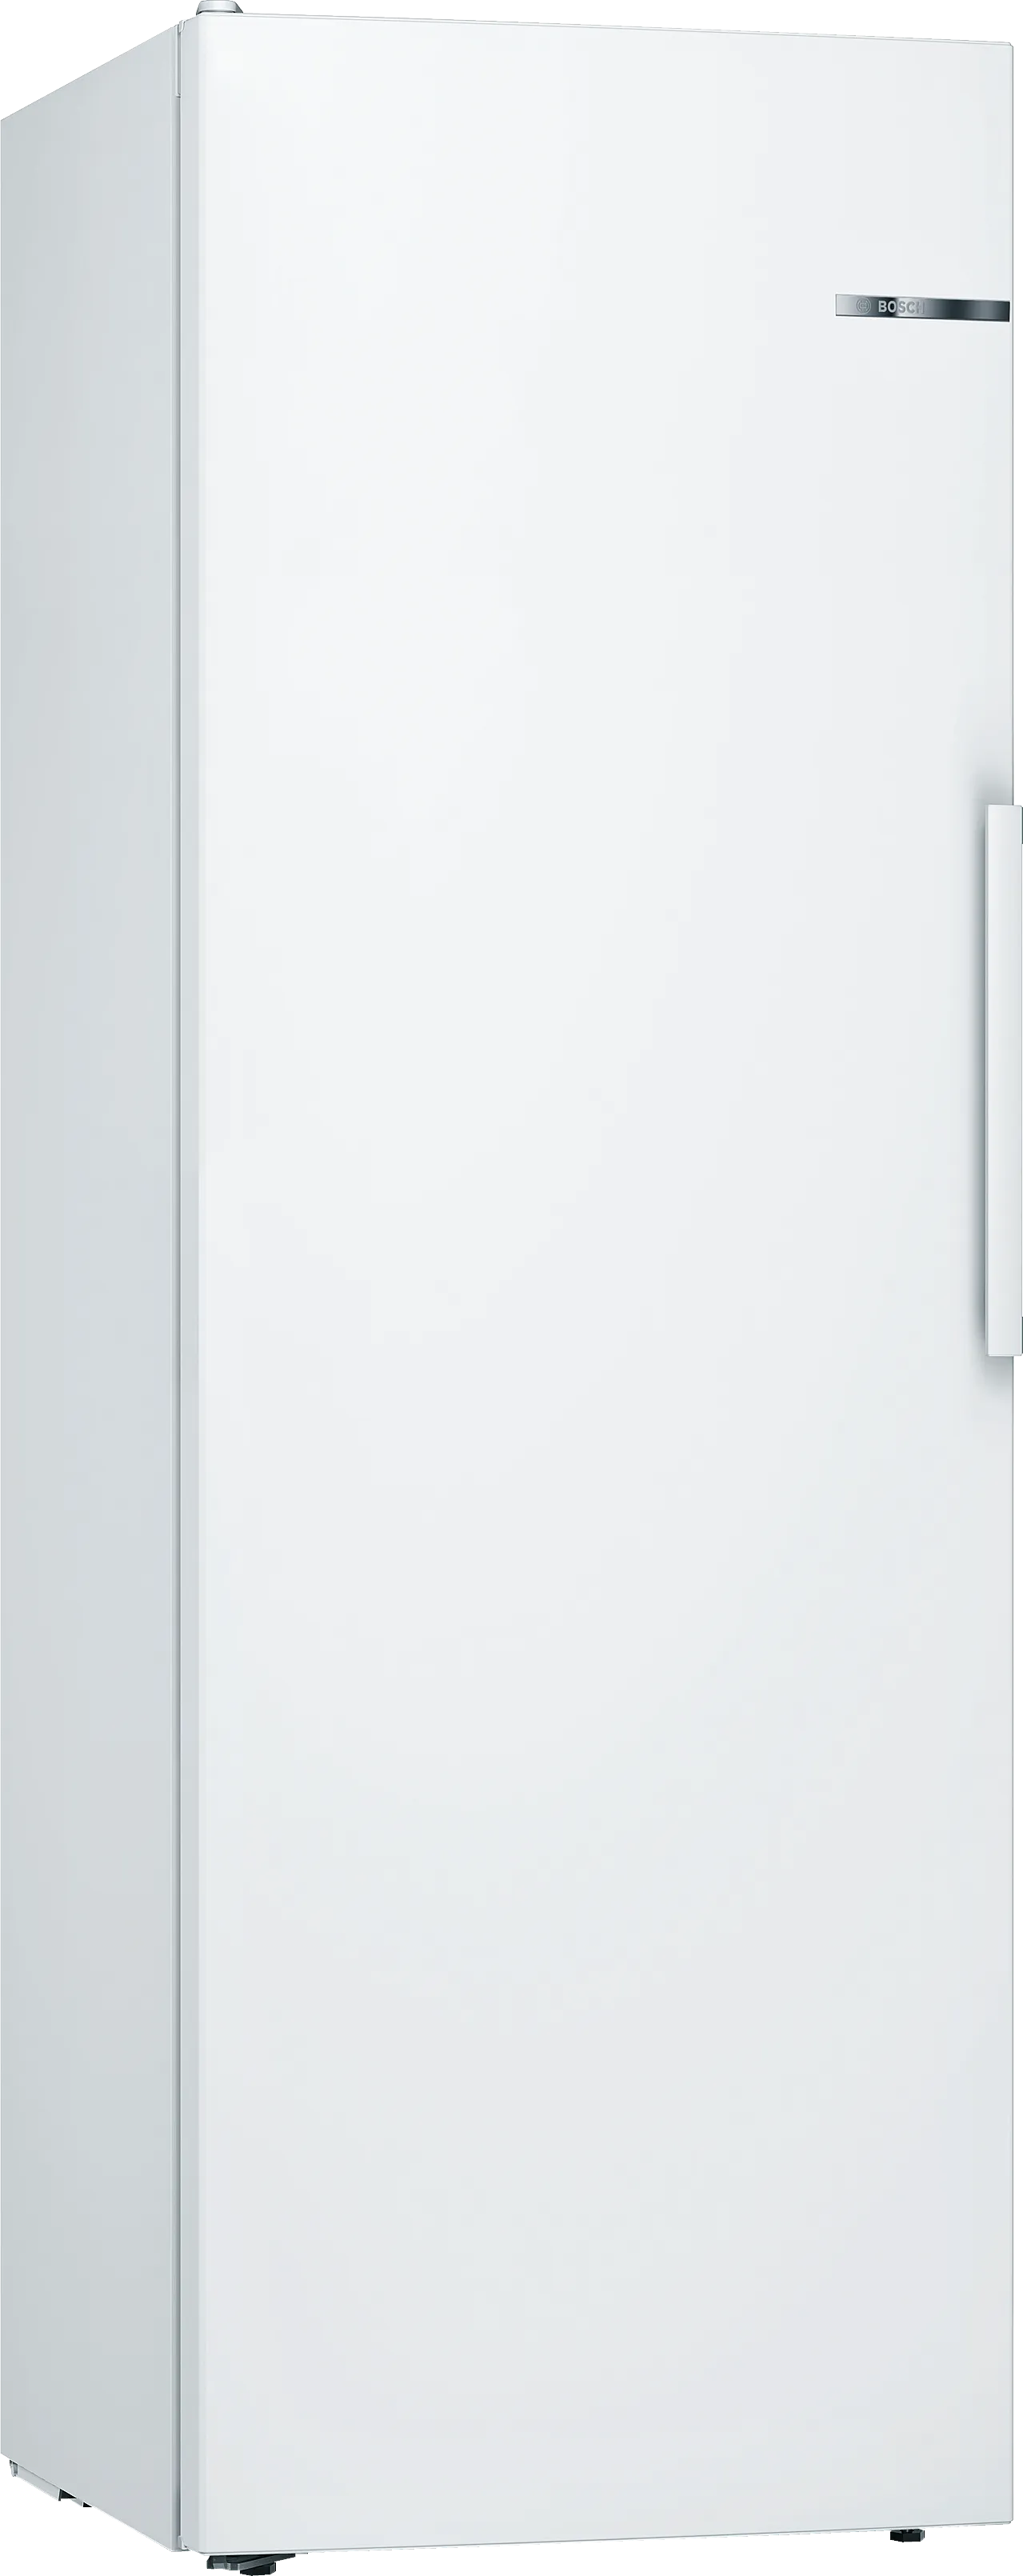 Series 4 free-standing fridge 176 x 60 cm White 